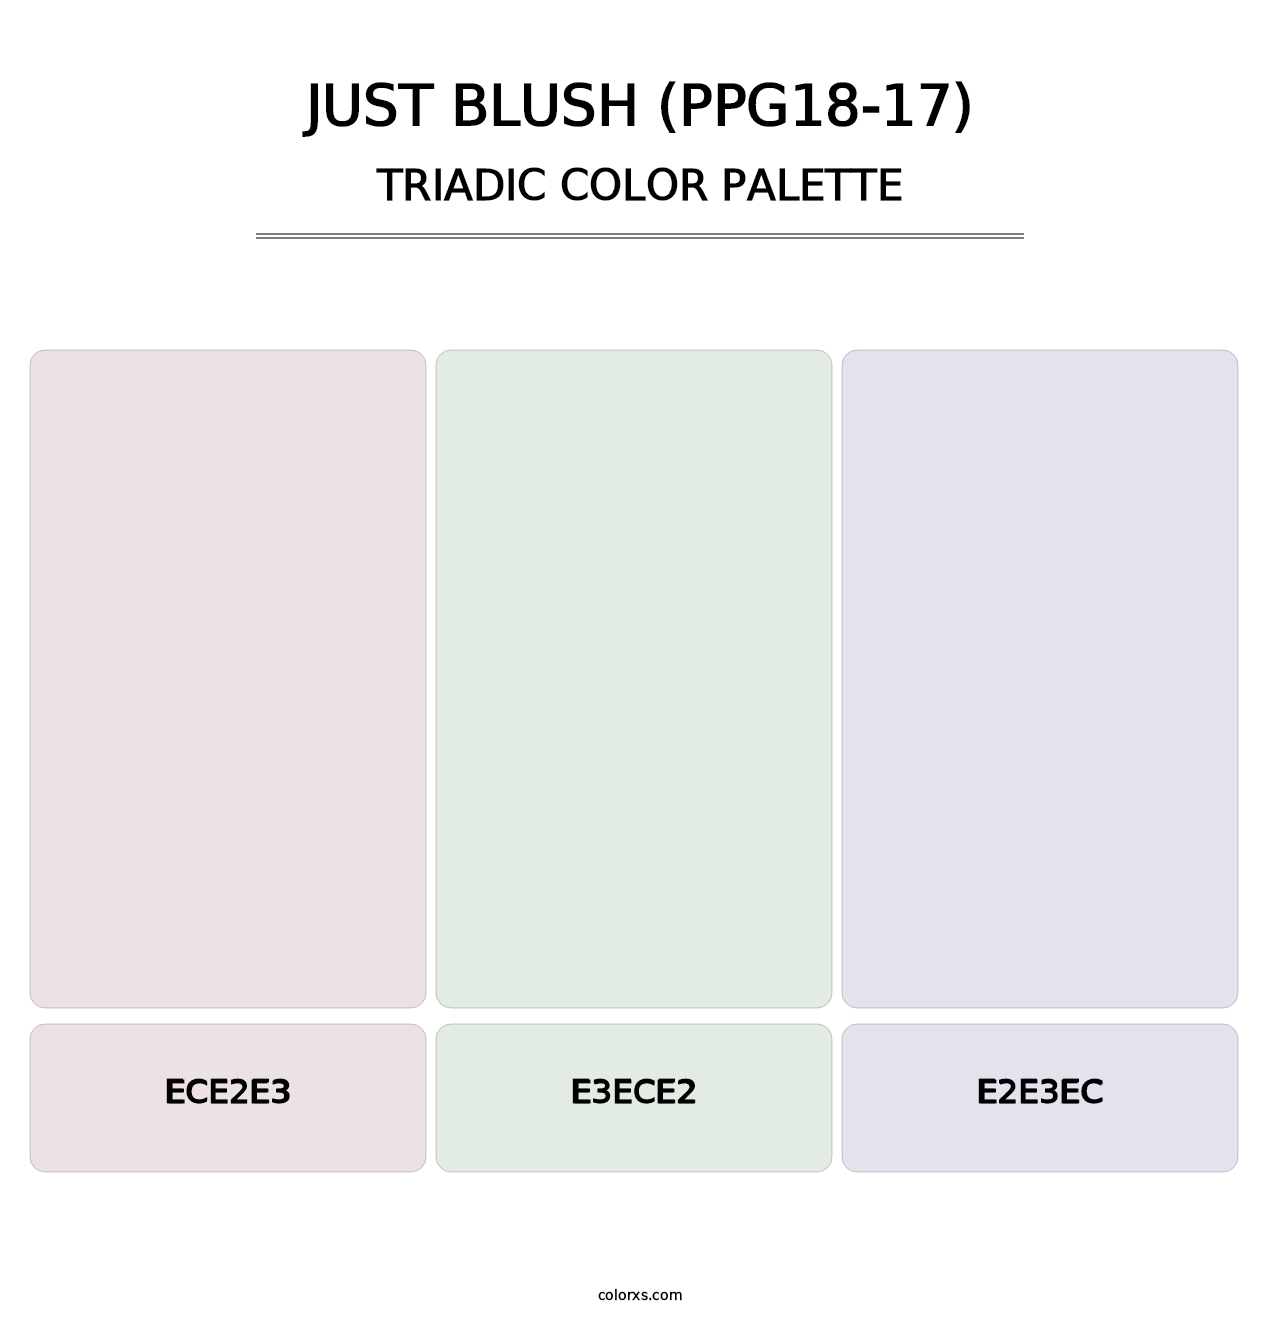 Just Blush (PPG18-17) - Triadic Color Palette